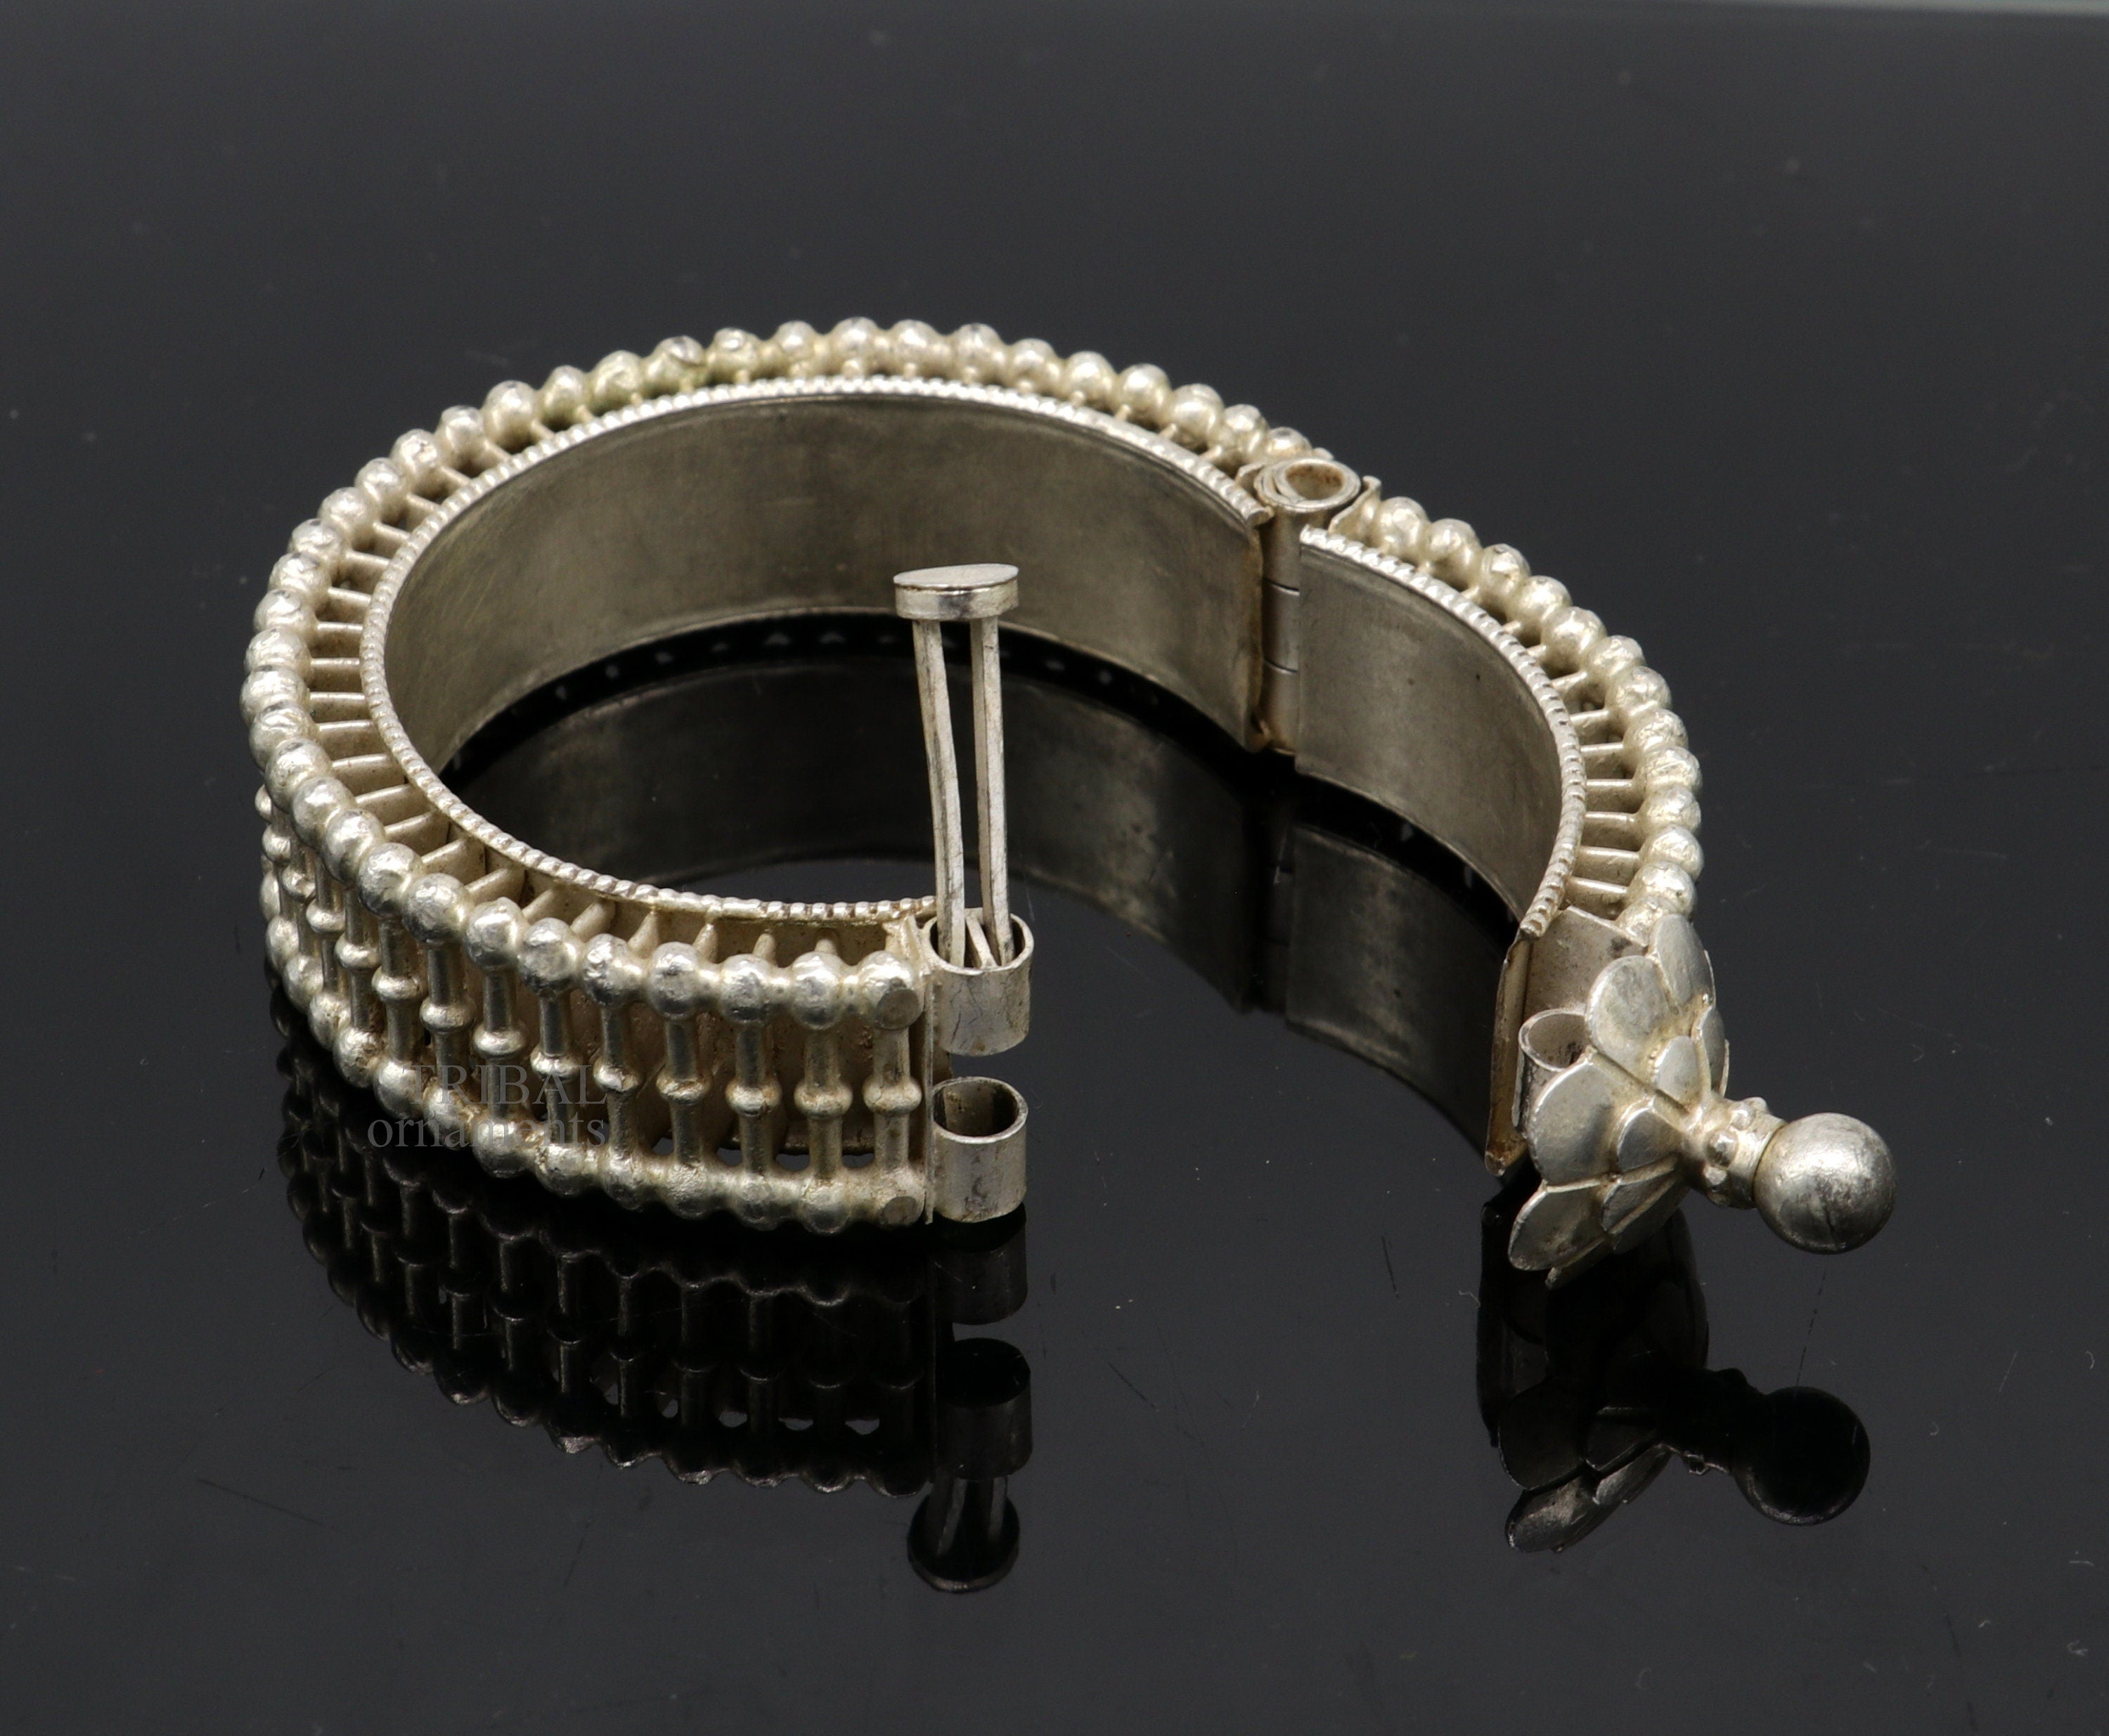 Buy Vintage Antique Tribal Old Silver Bangle Bracelet Cuff Online in India   Etsy